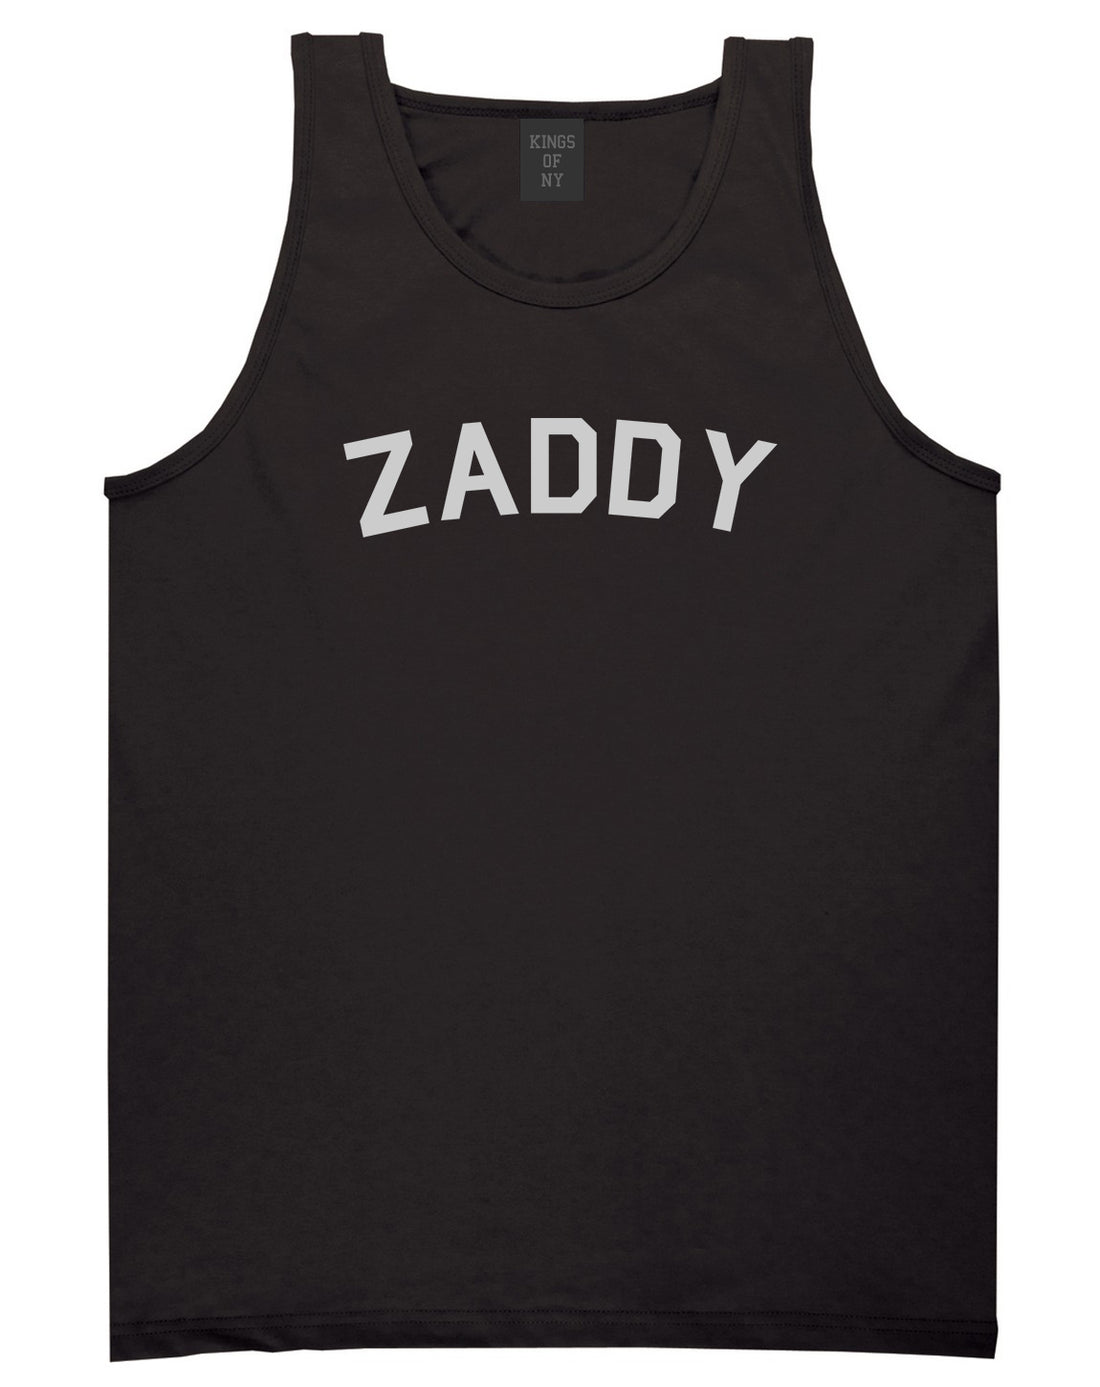 Zaddy Mens Tank Top Shirt Black